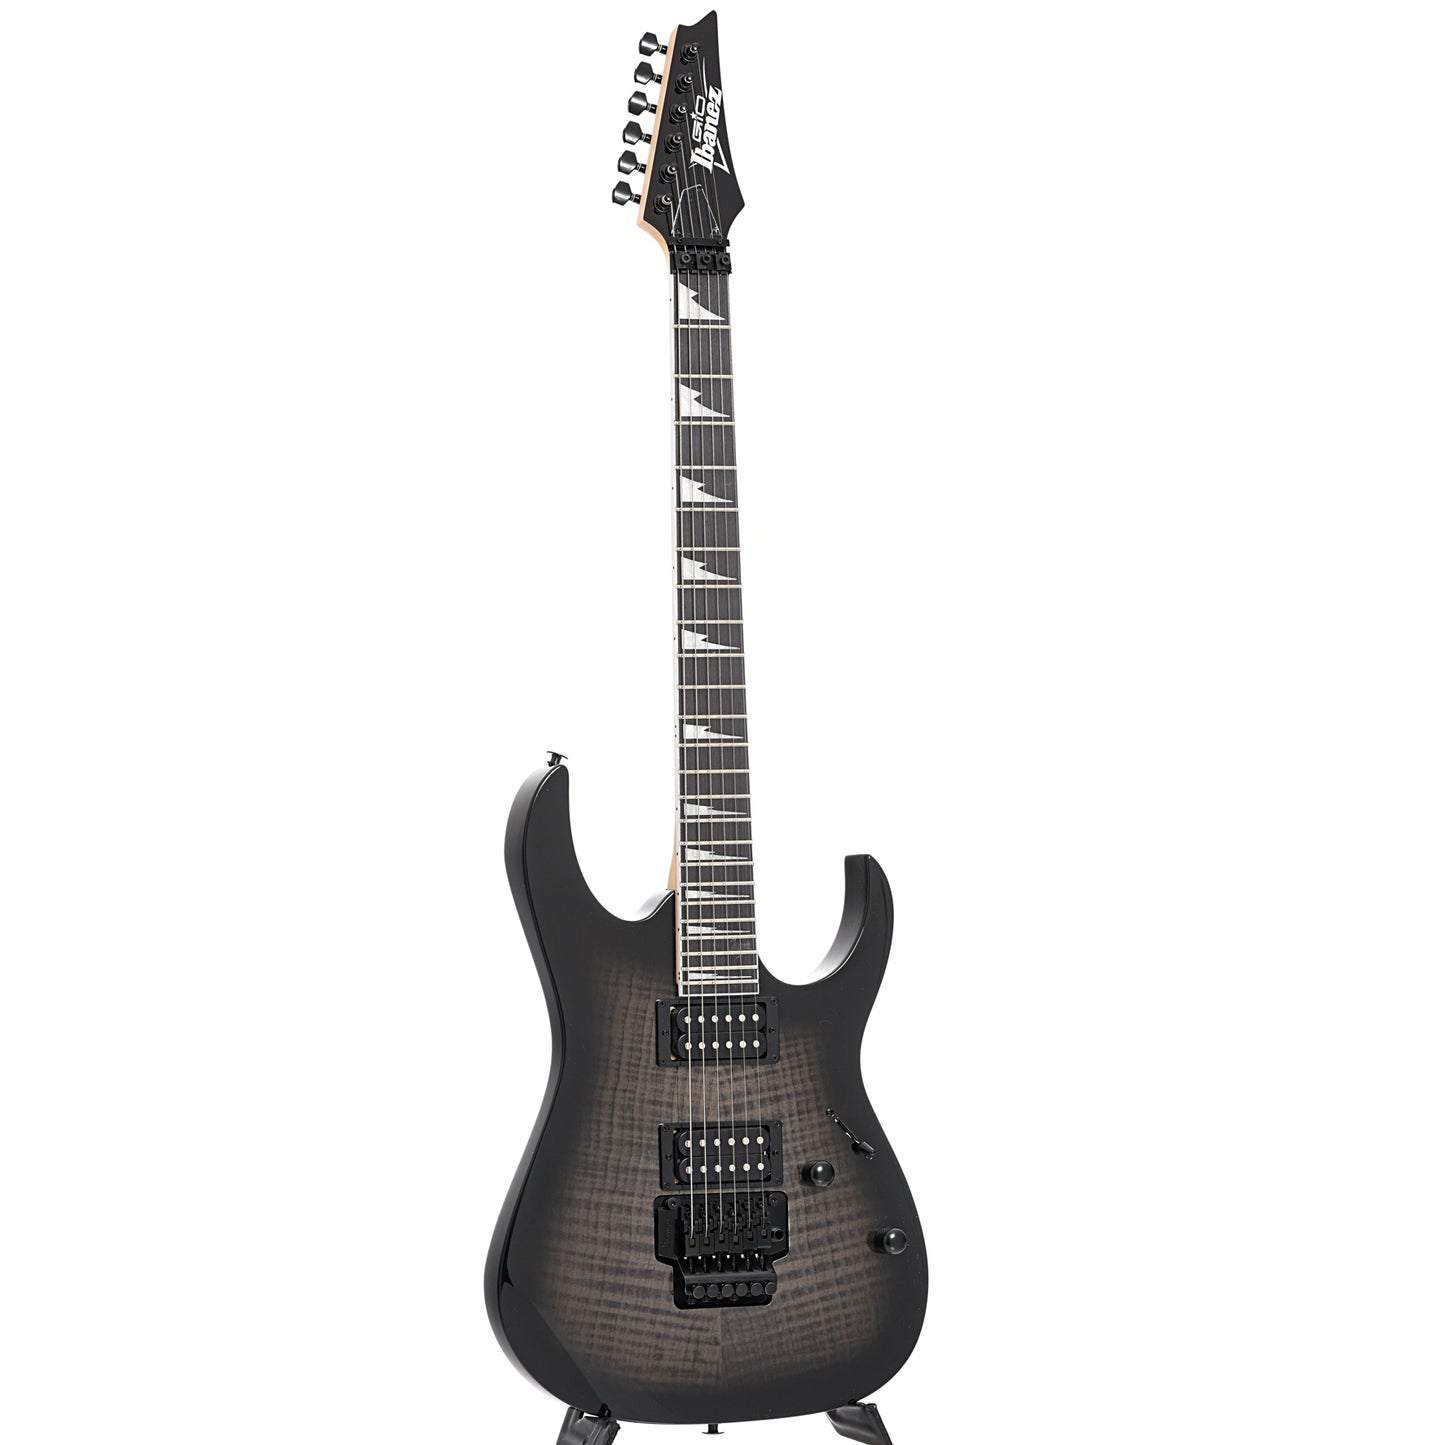 Full front and side of Ibanez Gio GRG320FA Electric Guitar, Transparent Black Sunburst